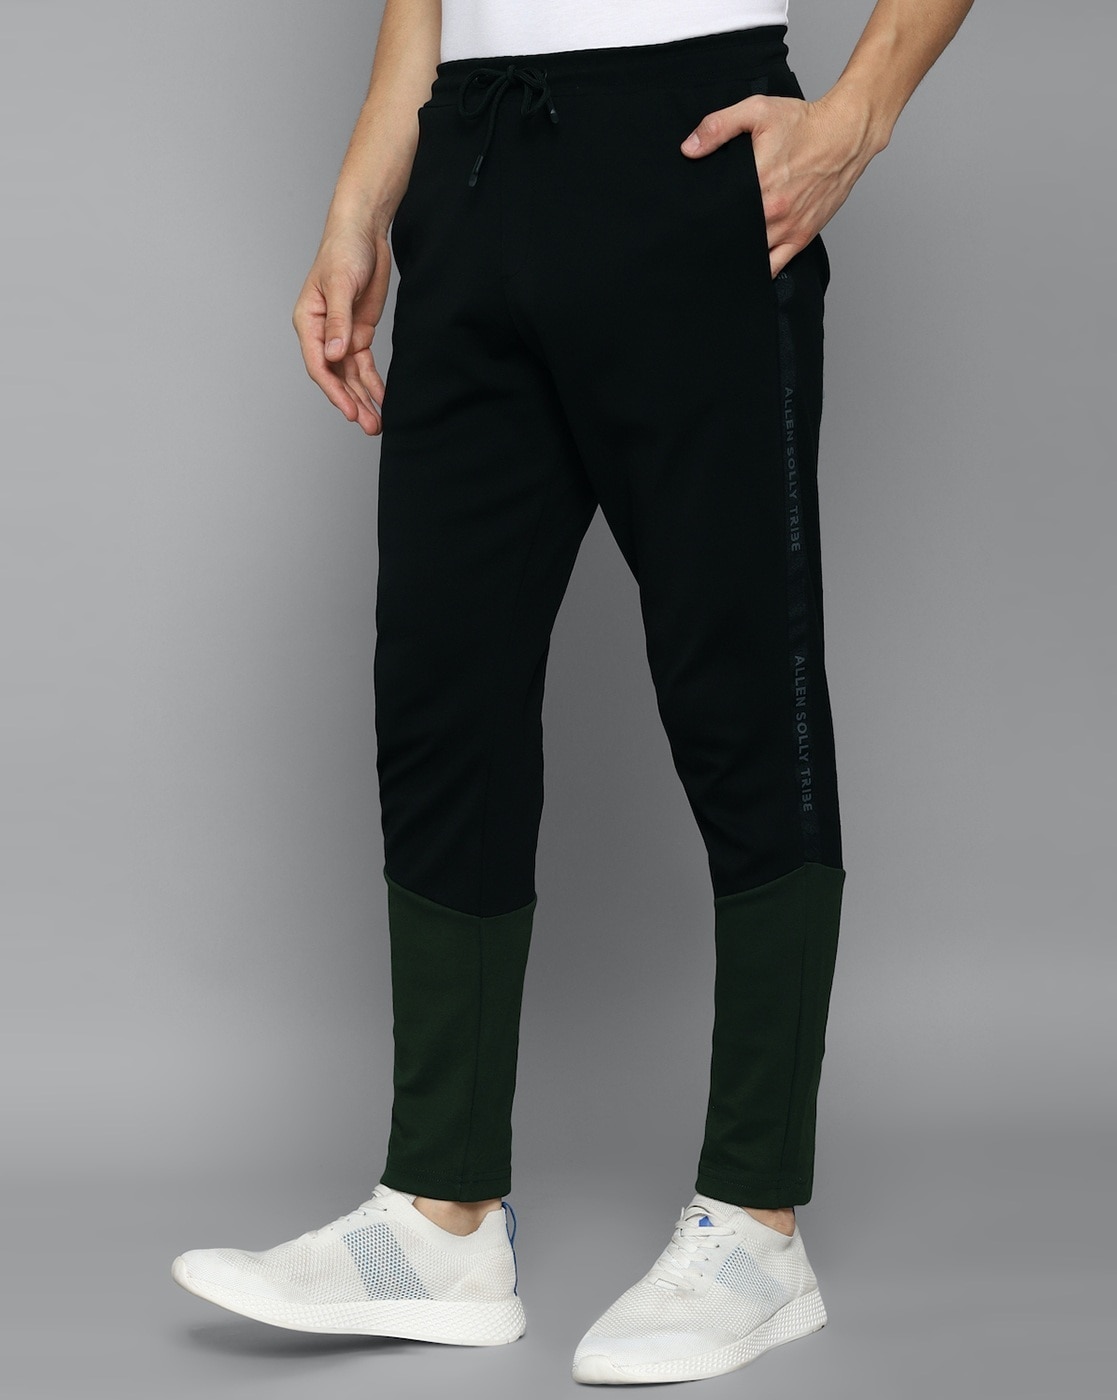 Buy Black Trousers & Pants for Women by ALLEN SOLLY Online | Ajio.com